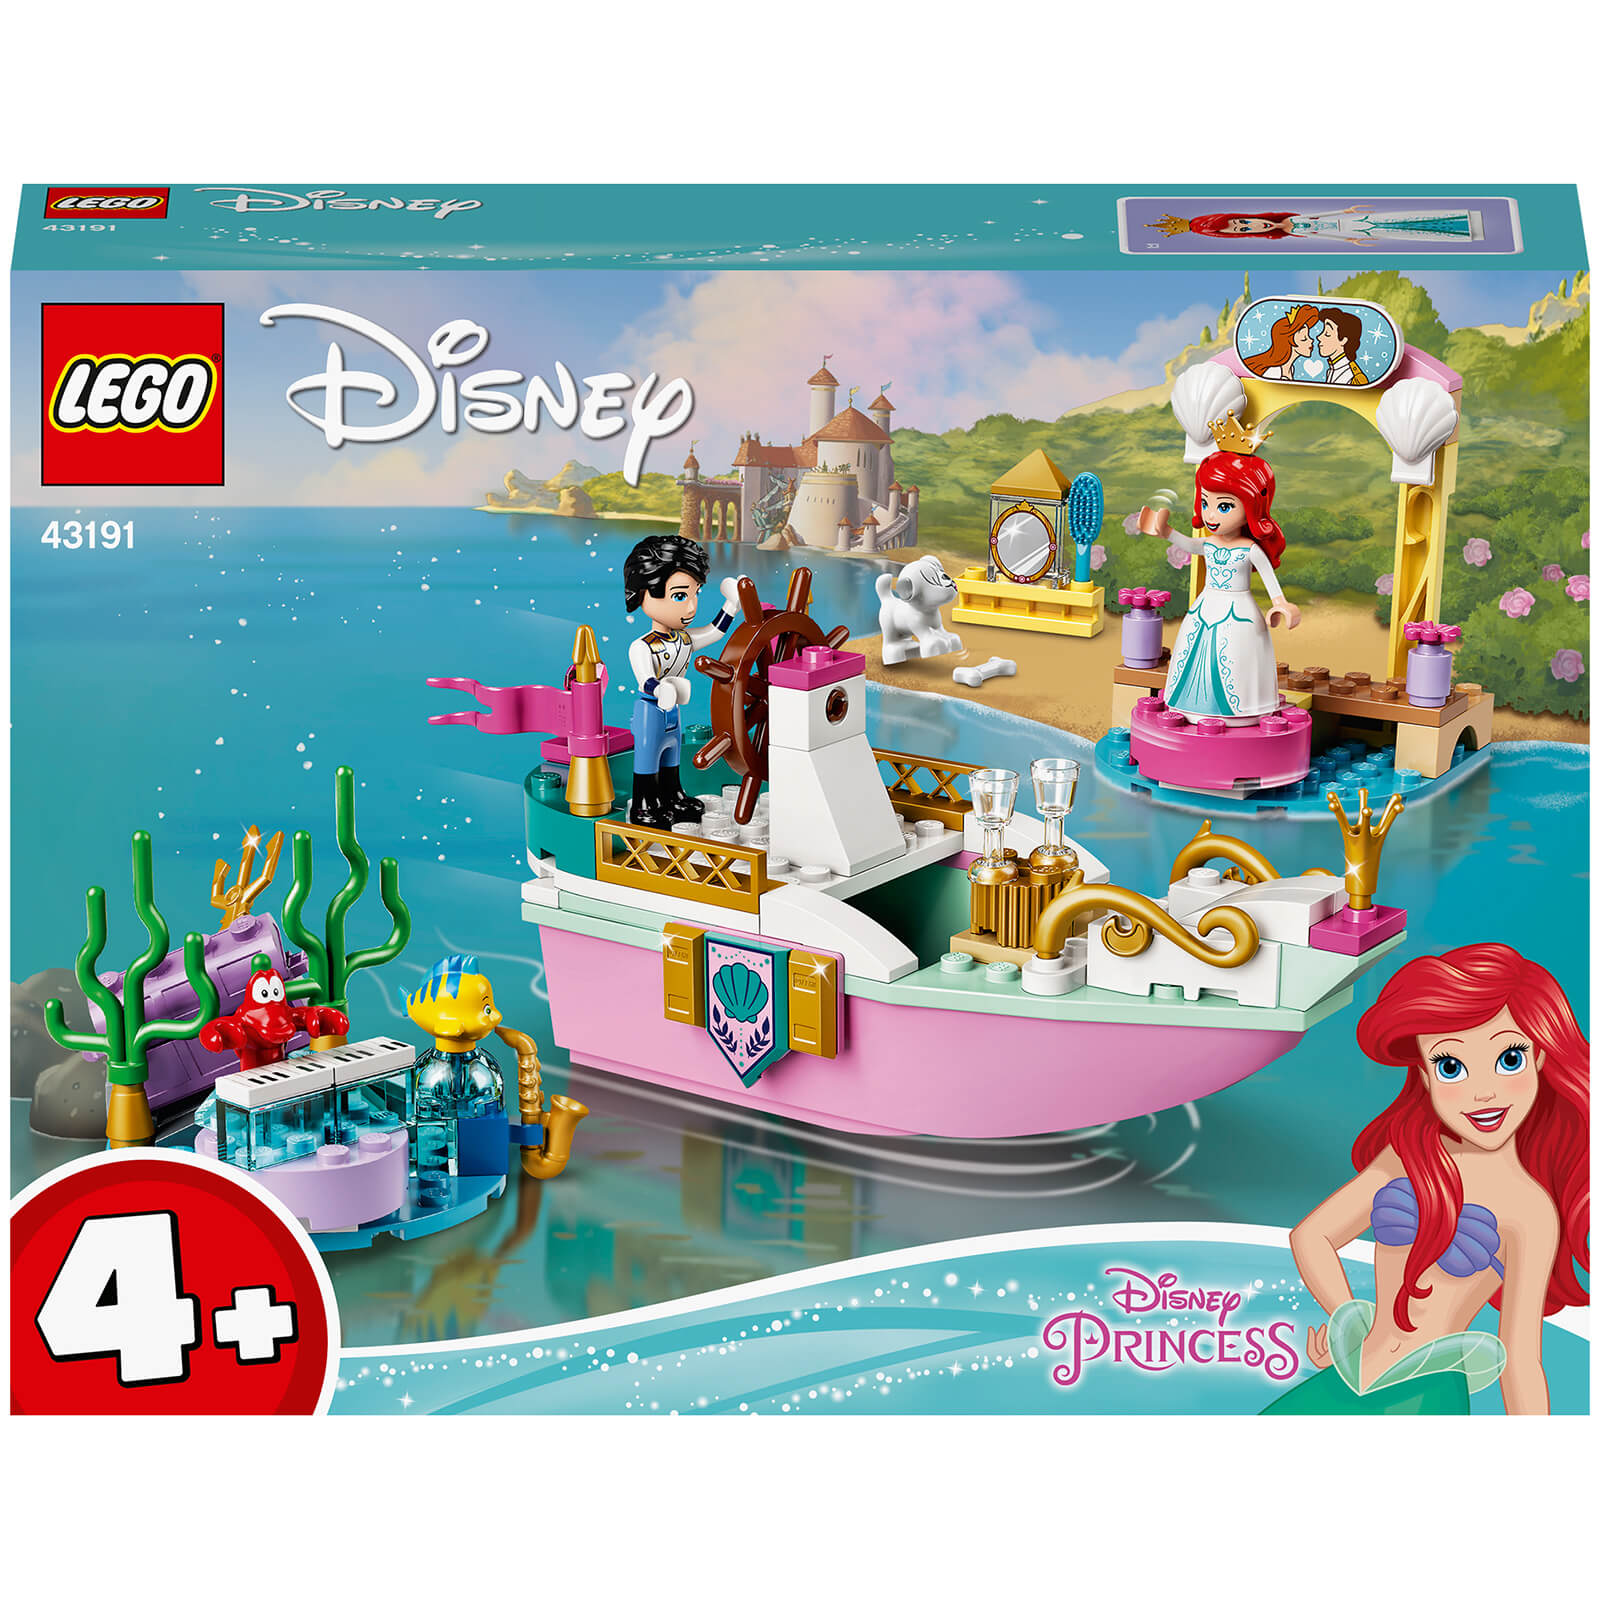 LEGO Disney Princess: Ariel’s Celebration Boat Toy (43191)